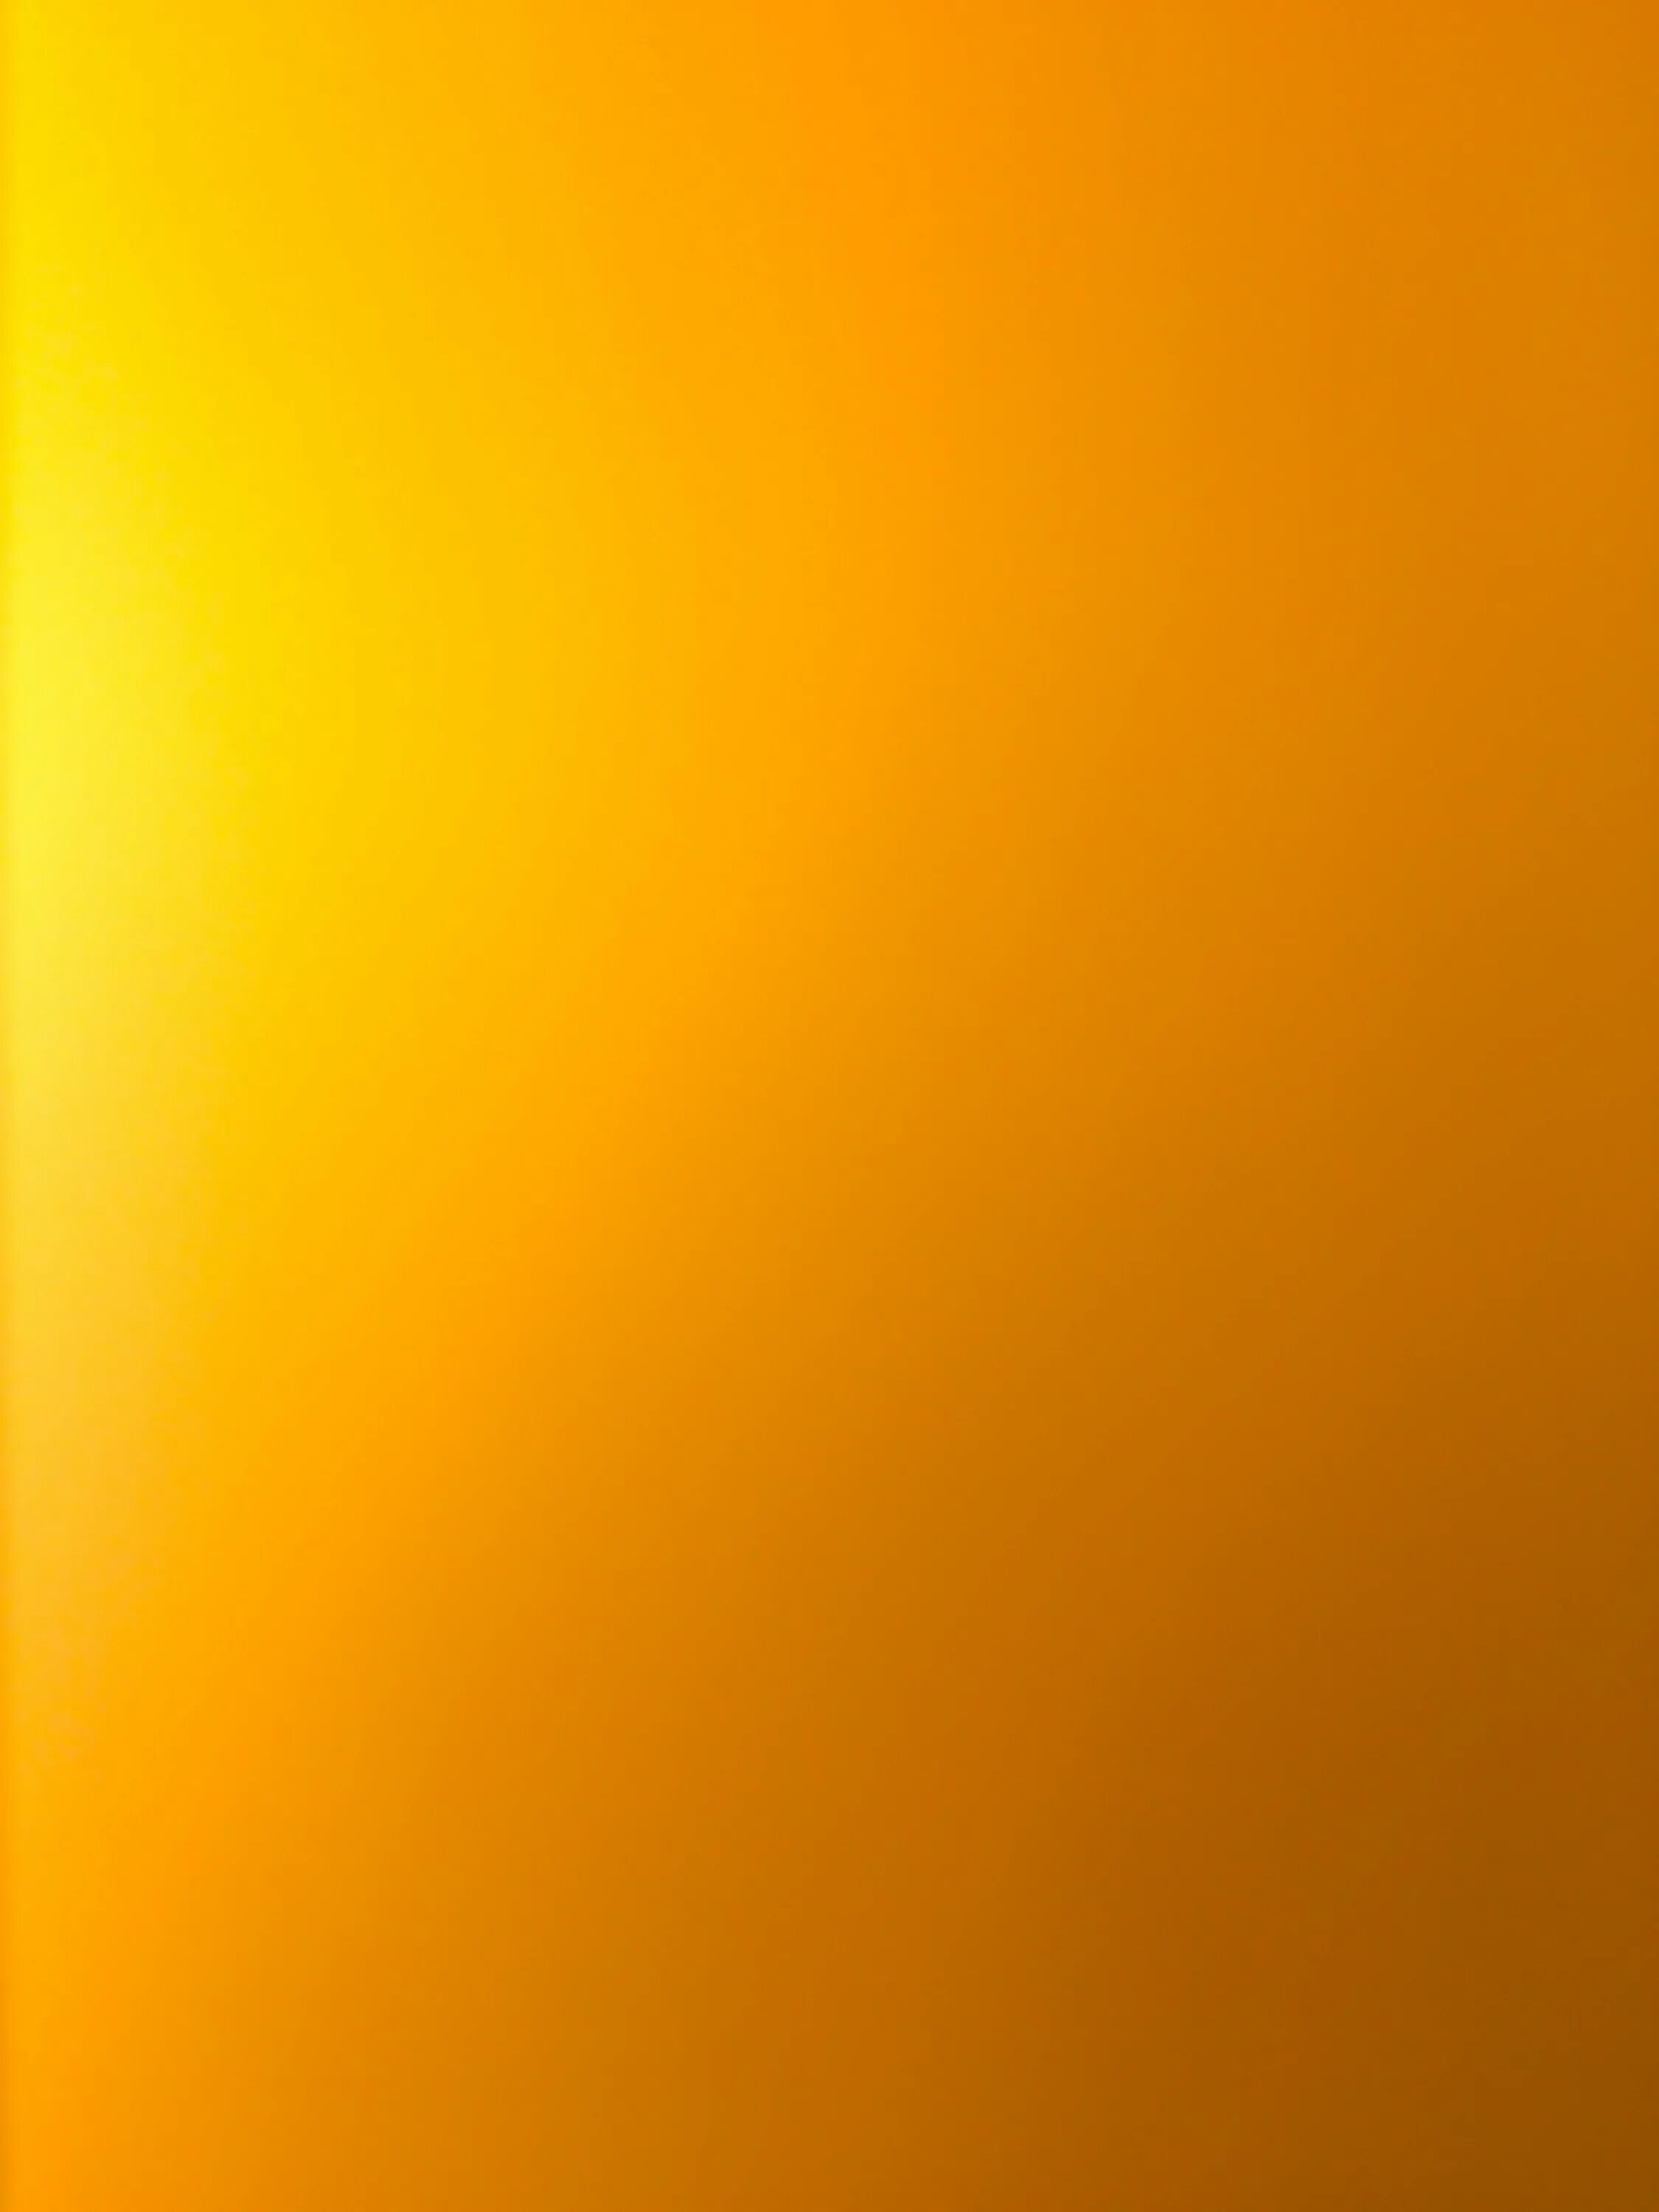 Темный оранжево желтый цвет. Желтый градиент. Оранжевый градиент. Желто оранжевый градиент. Градиент с желтым цветом.